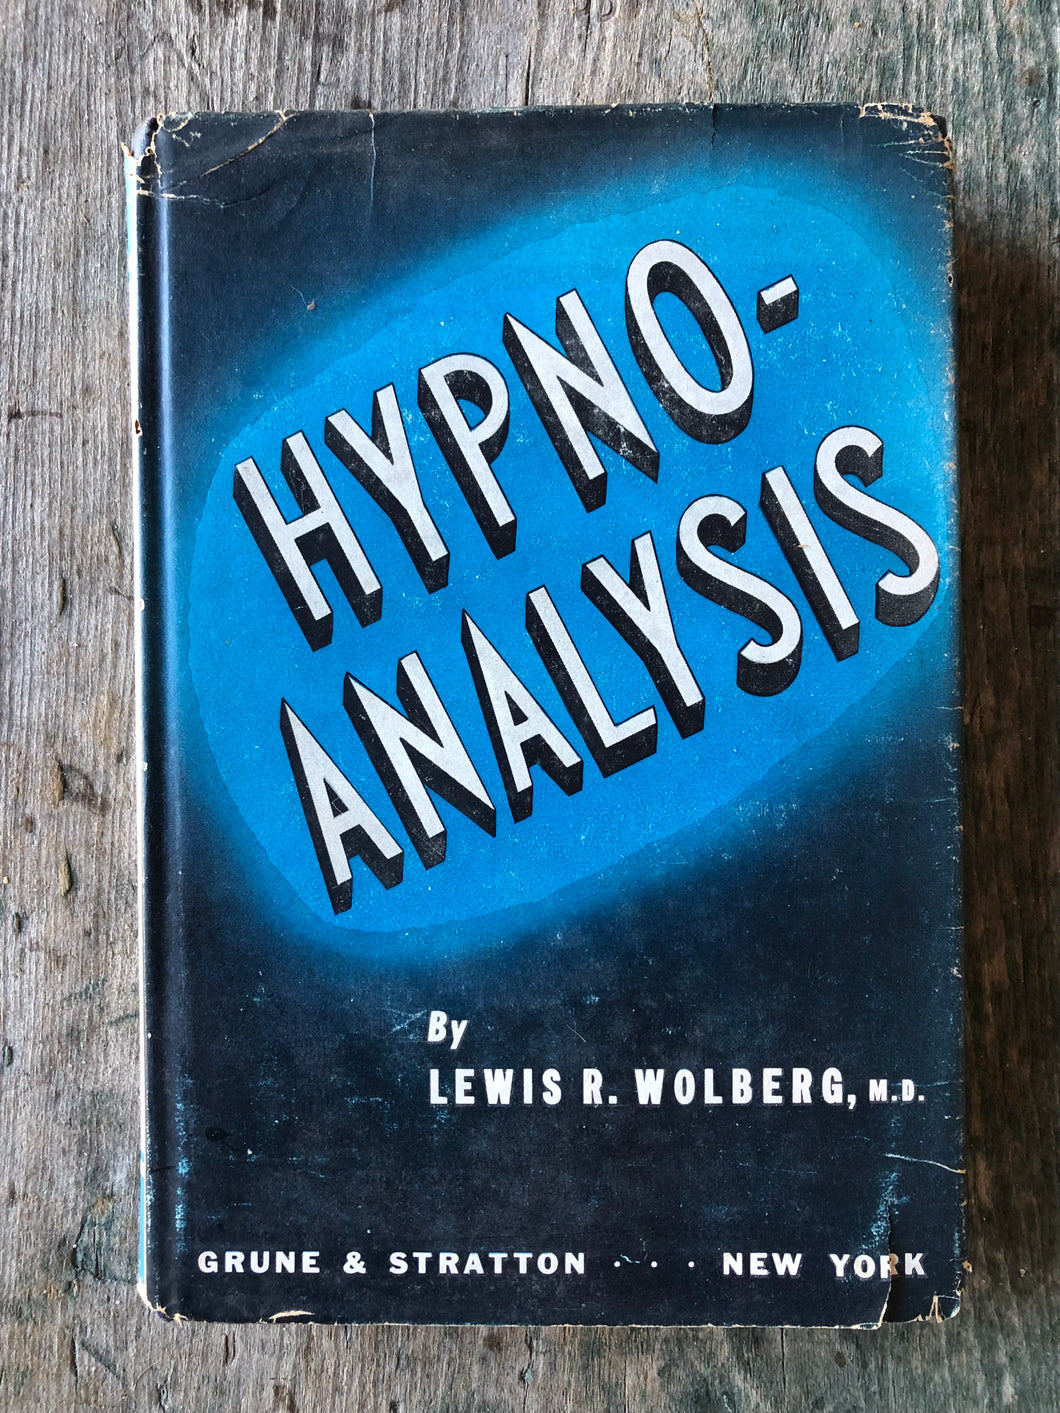 Hypnoanalysis by Lewis R. Wolberg